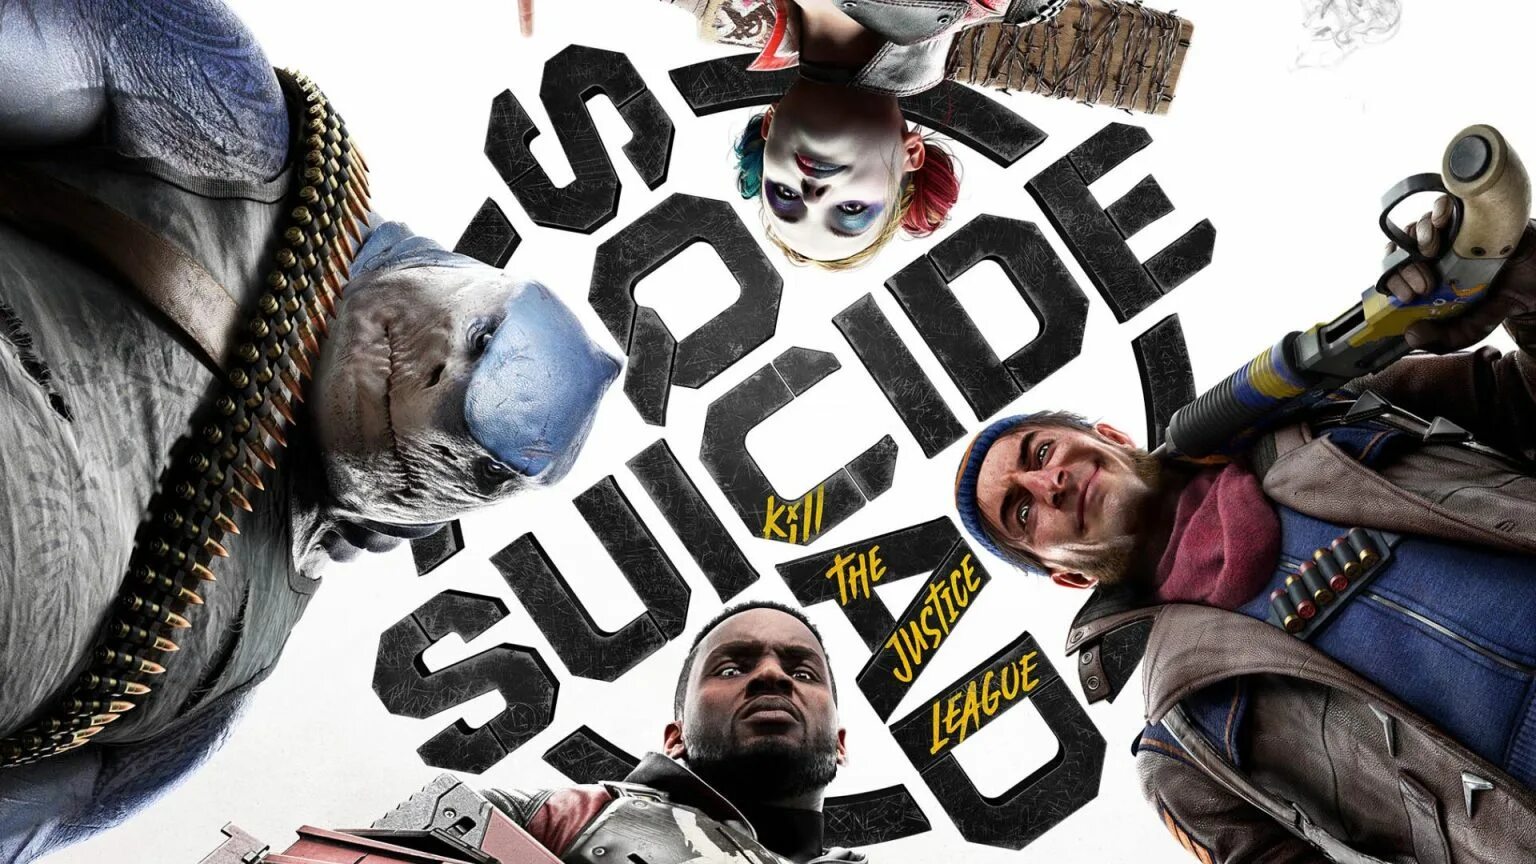 Kill the justice league игра. Отряд самоубийц игра 2022. Suicide Squad: Kill the Justice League (2022). Отряд самоубийц игра 2023. Suicide Squad Kill the Justice League игра.